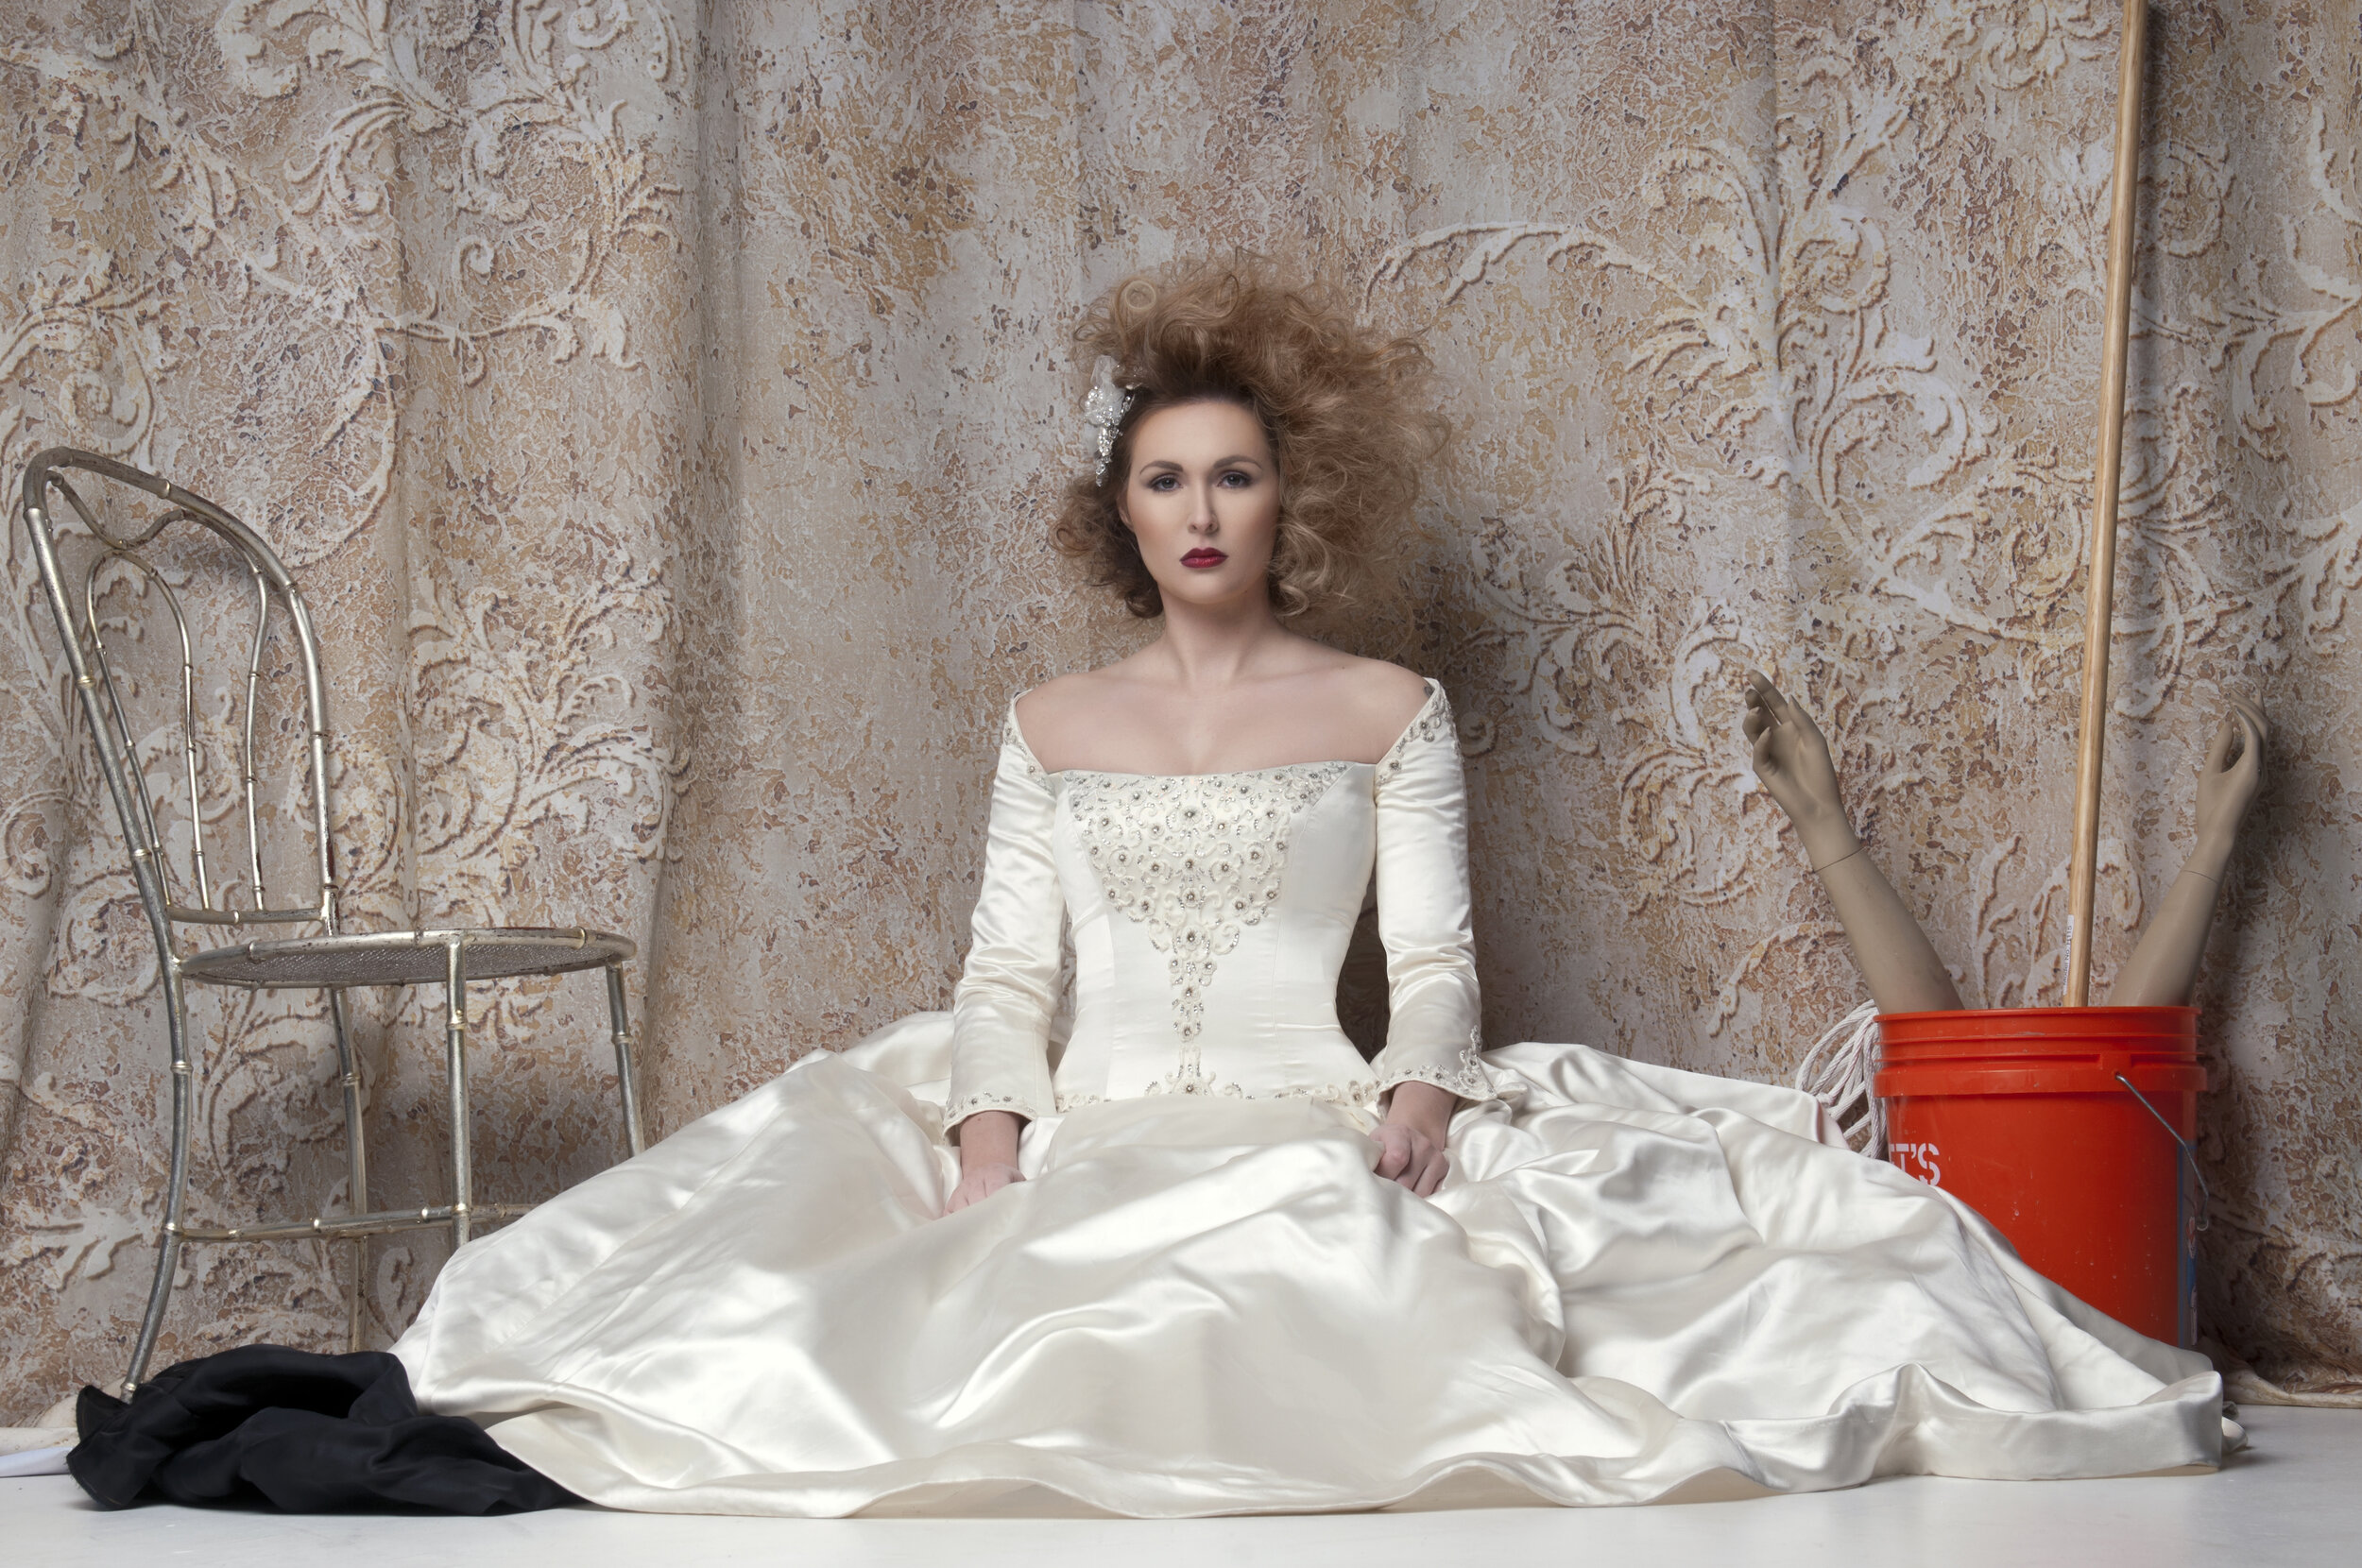 Reem Acra Vintage Queen — Baltimore Bridal Suite